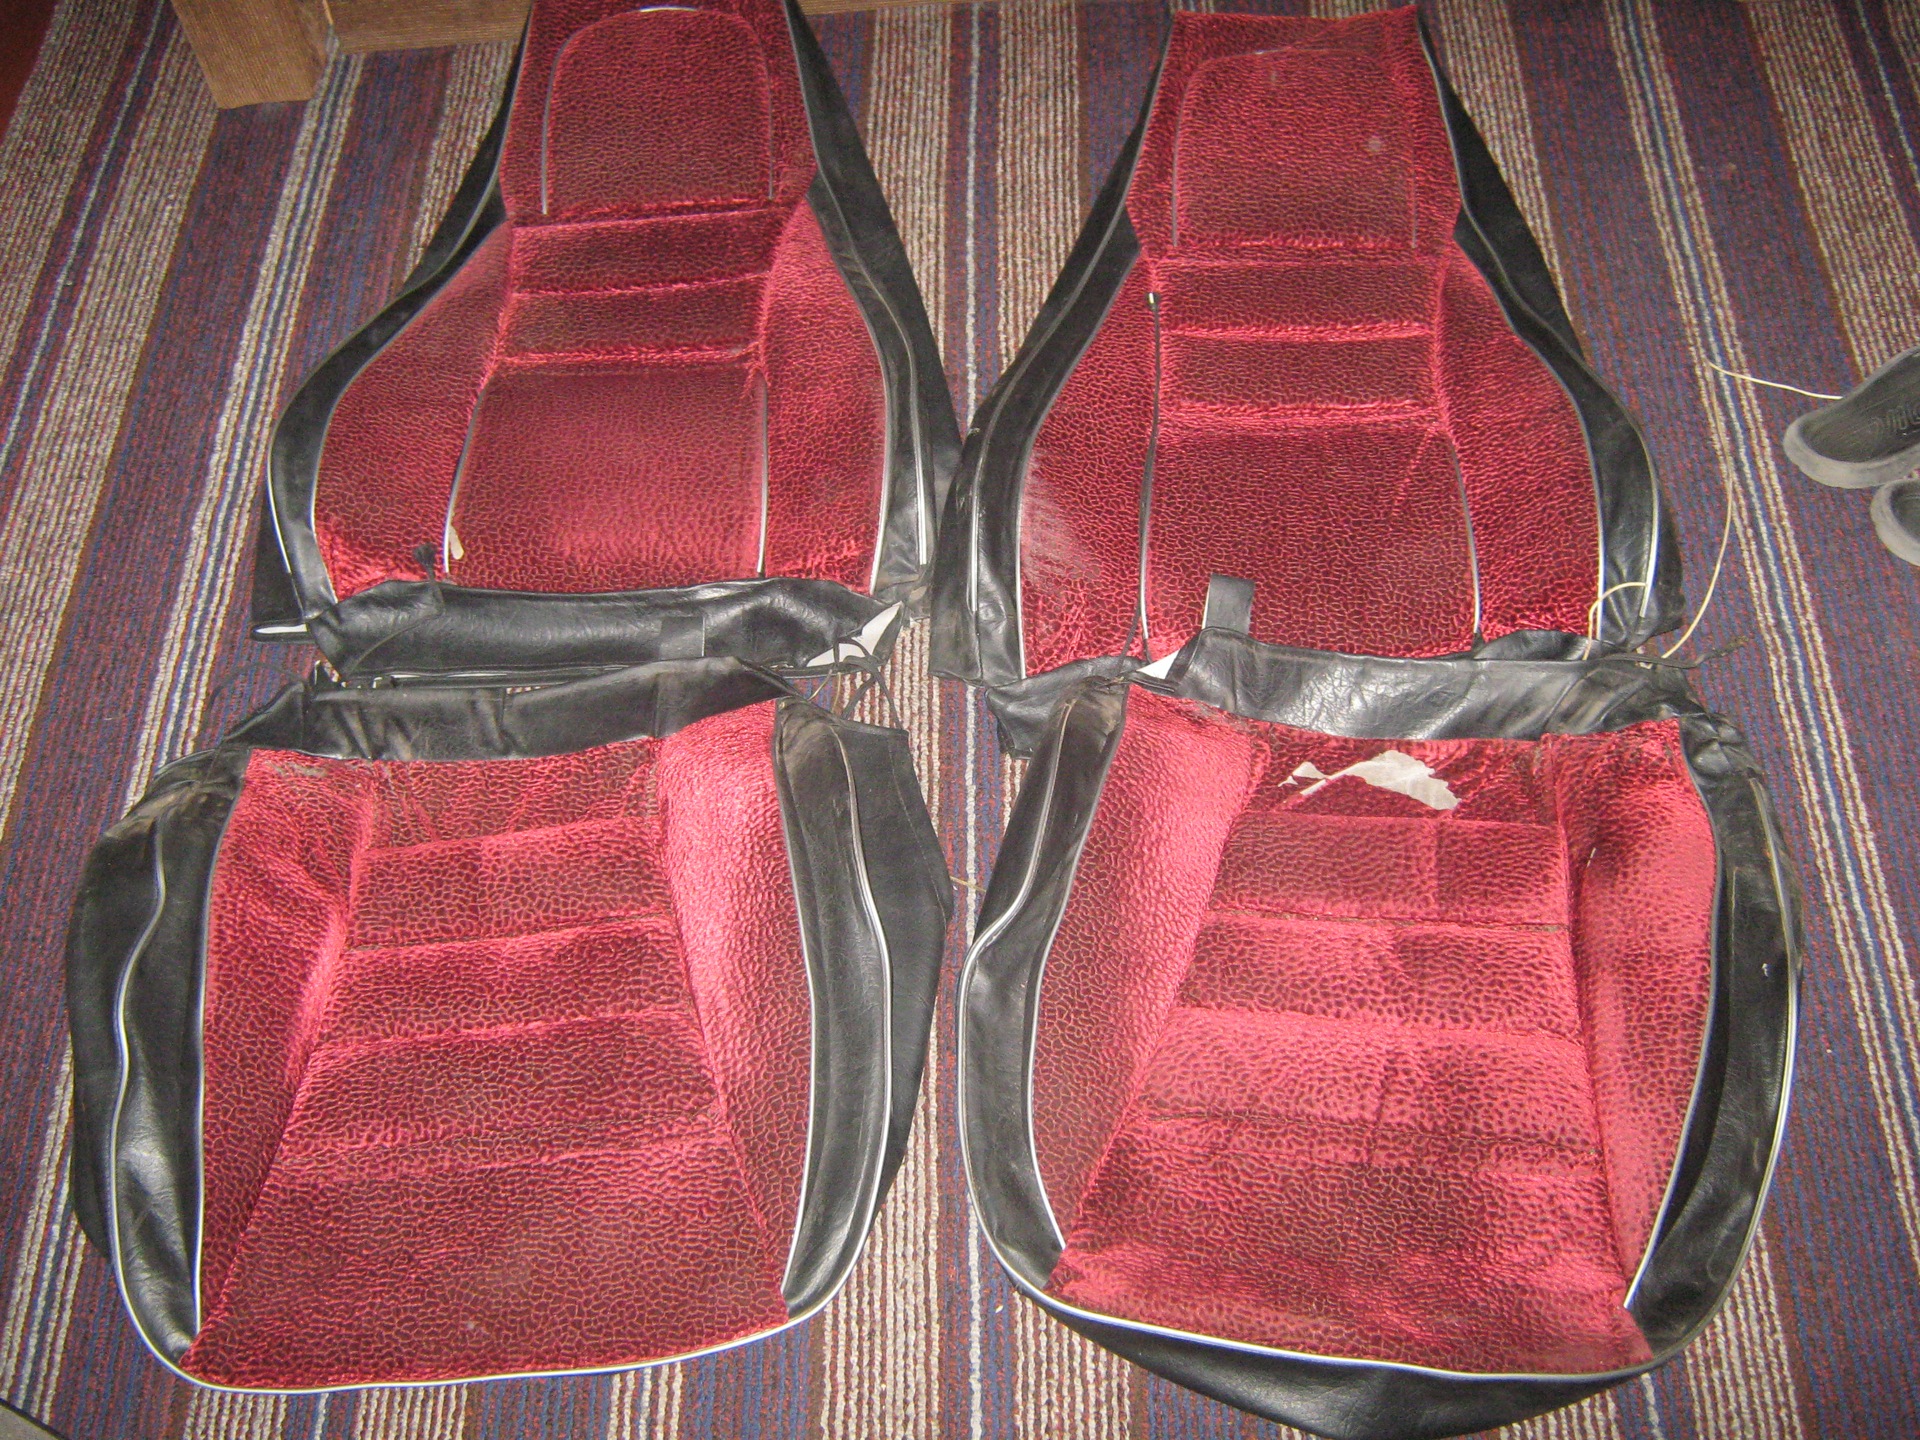 Накидки ваз 2107. Чехлы на ВАЗ 2107. Чехлы на сиденья ВАЗ 2106. Красные сидения ВАЗ 2106. Чехлы ВАЗ 2107 велюр.